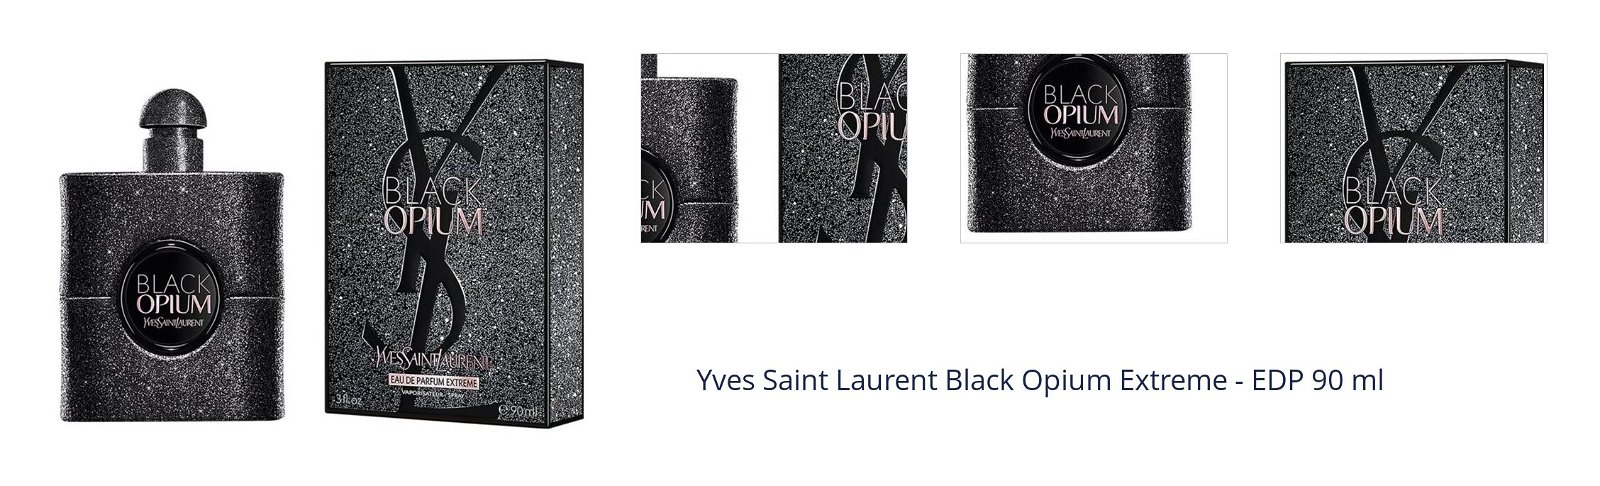 Yves Saint Laurent Black Opium Extreme - EDP 90 ml 1